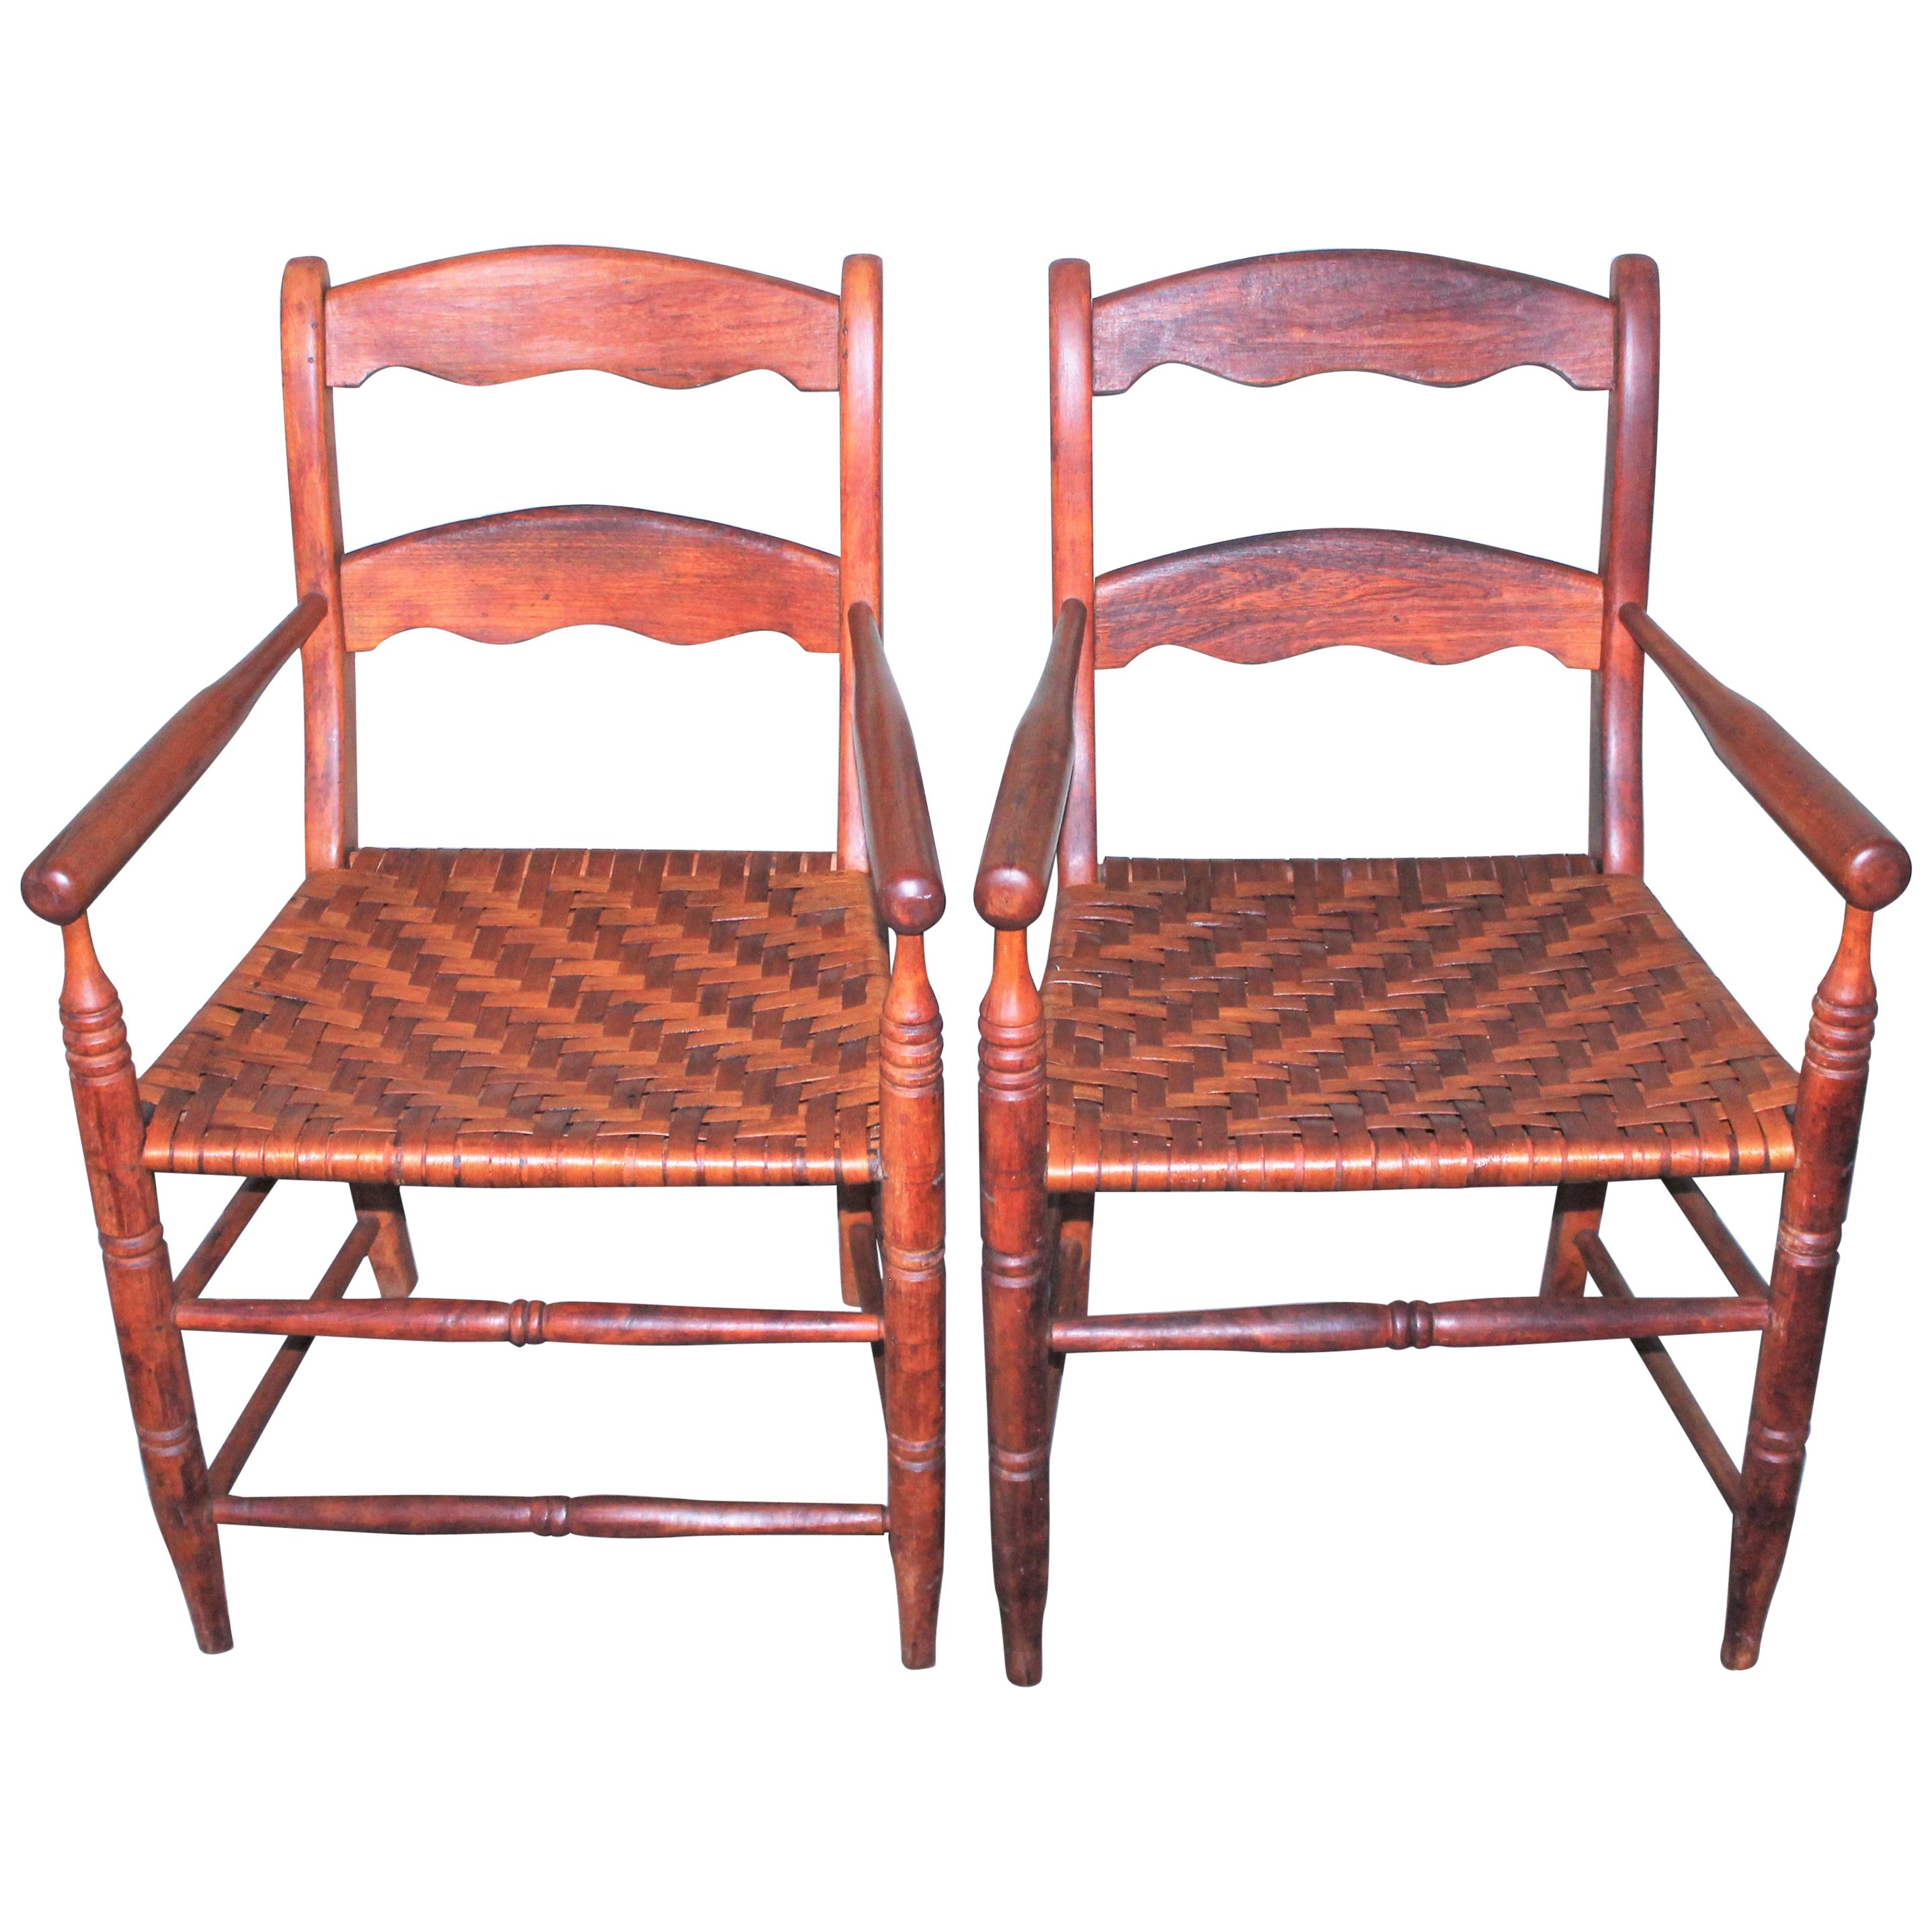 19th Century Hickory Chairs with Original Rush Seats, Pair